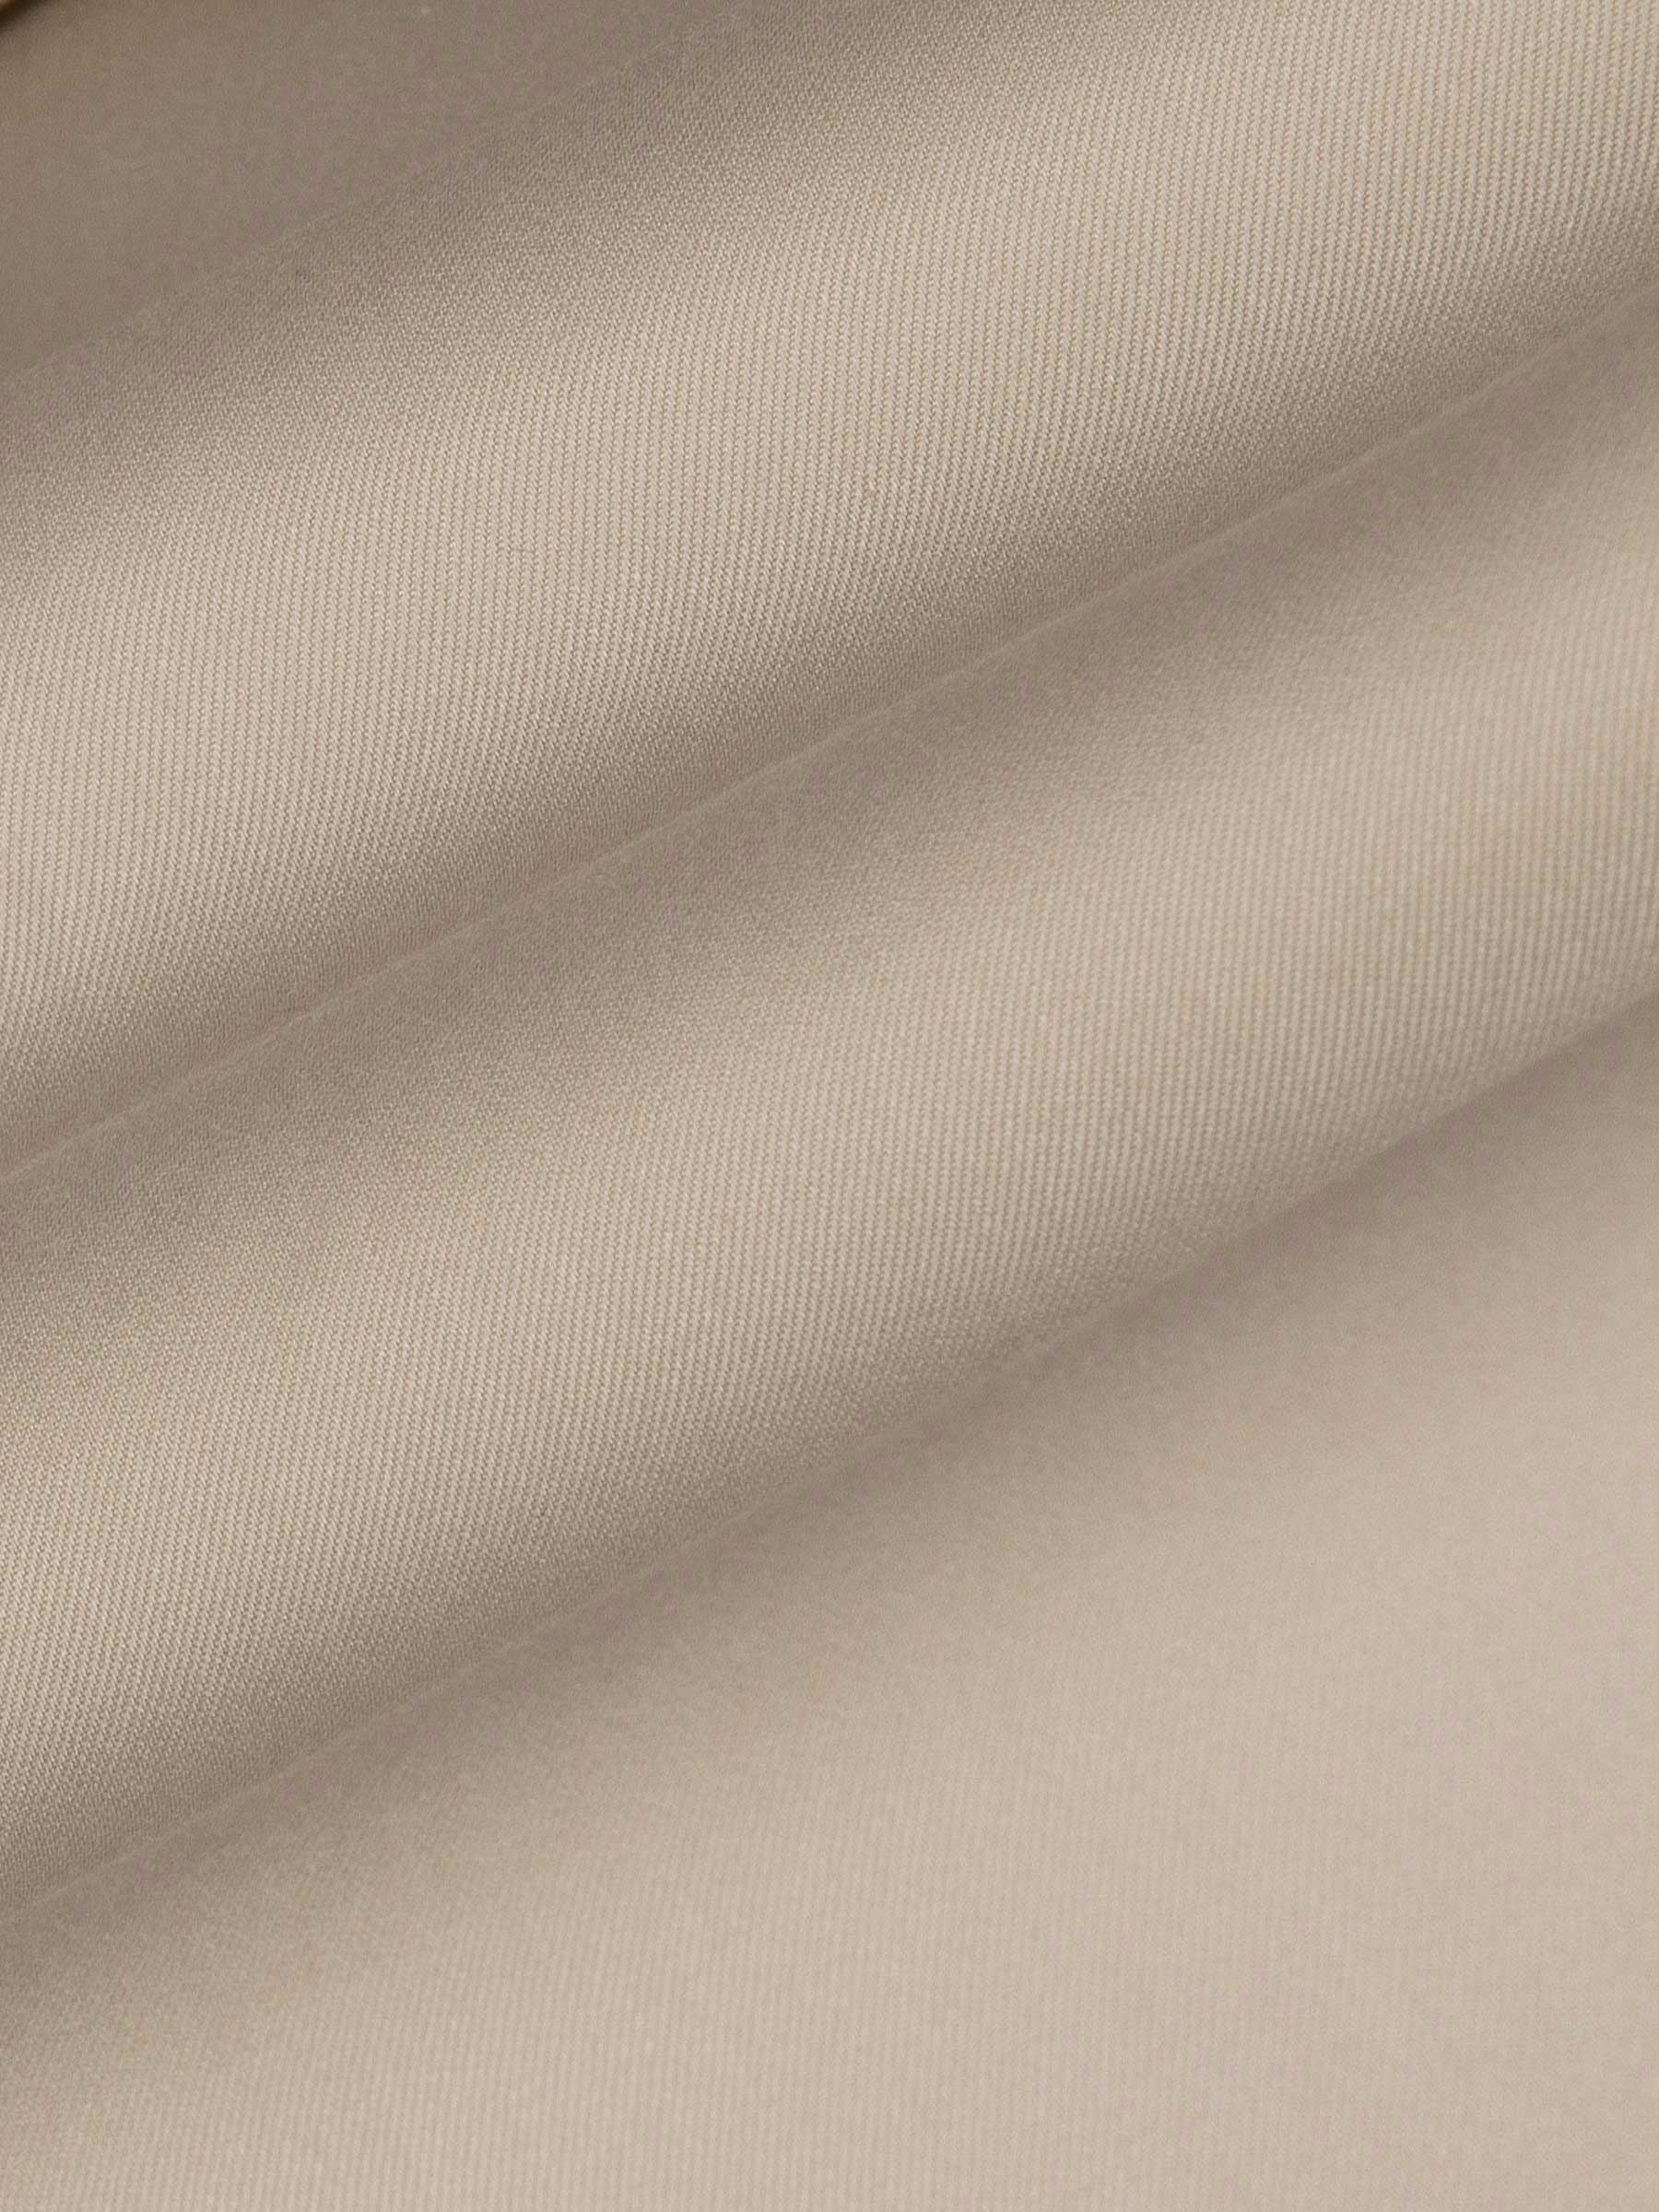 Vercelli Solid Beige Shirt Long Sleeve 